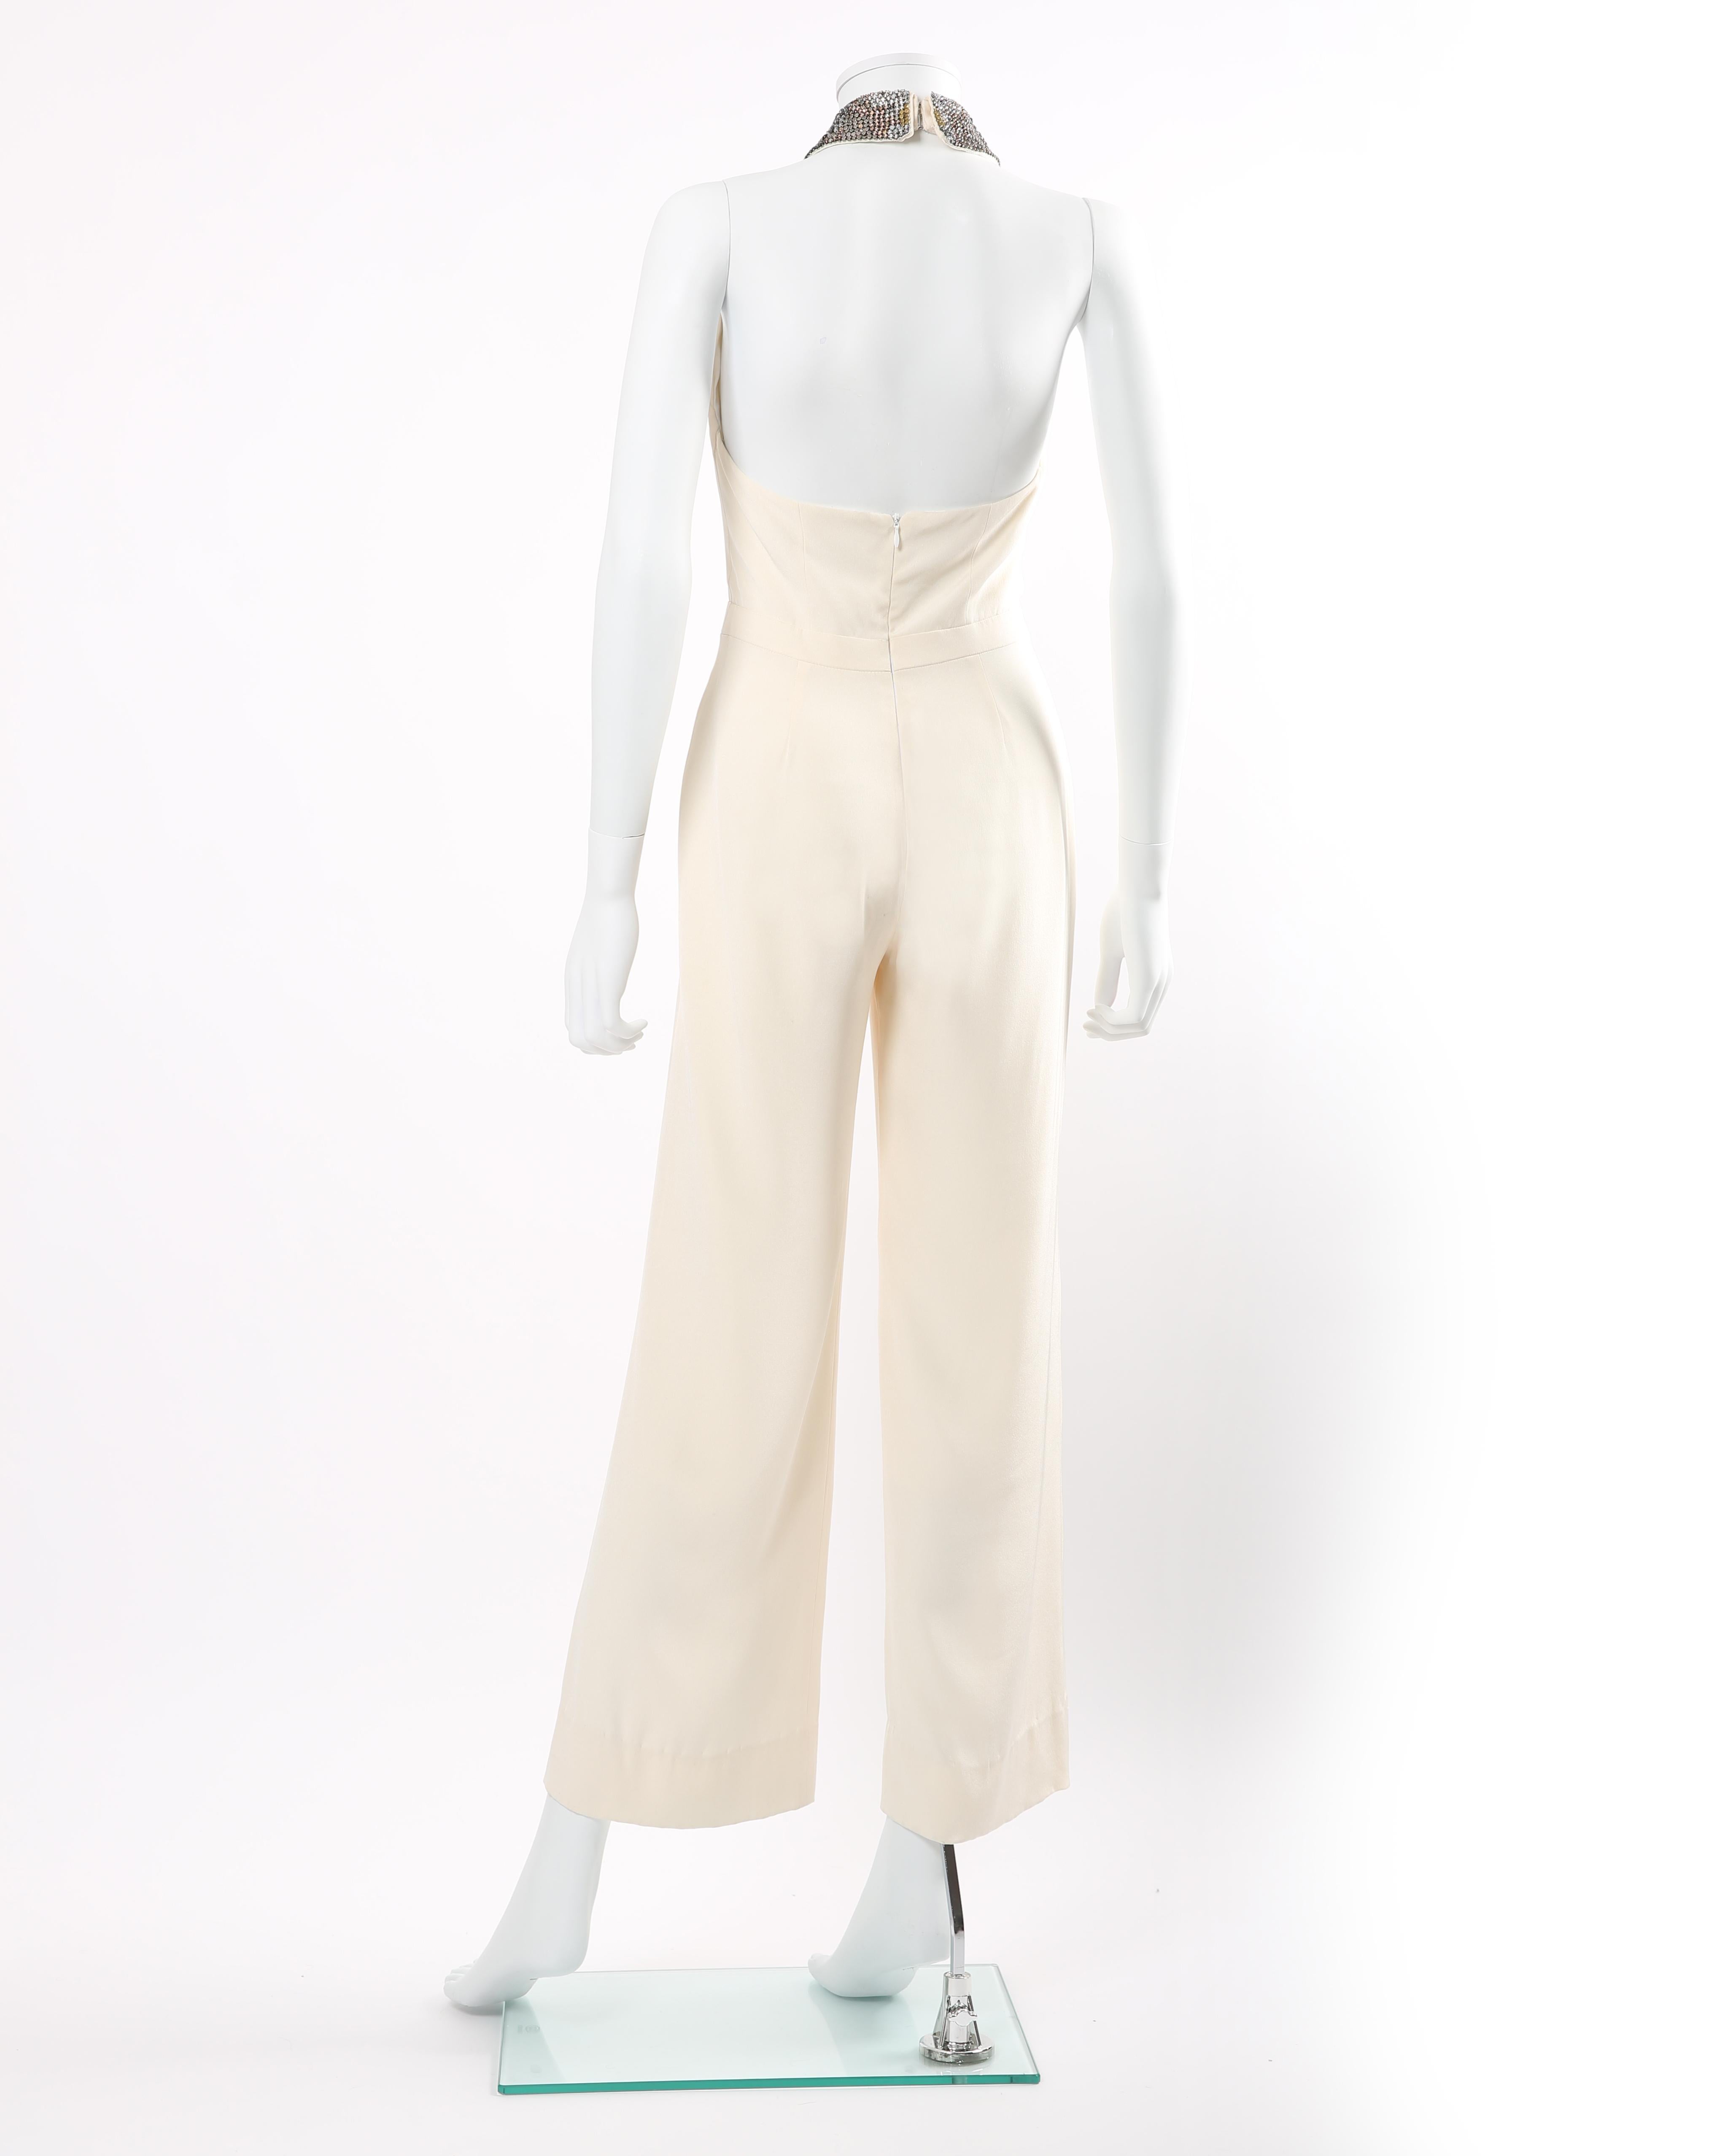 Beige Jenny Packham ivory cream crystal jewel collar backless wedding dress jumpsuit For Sale